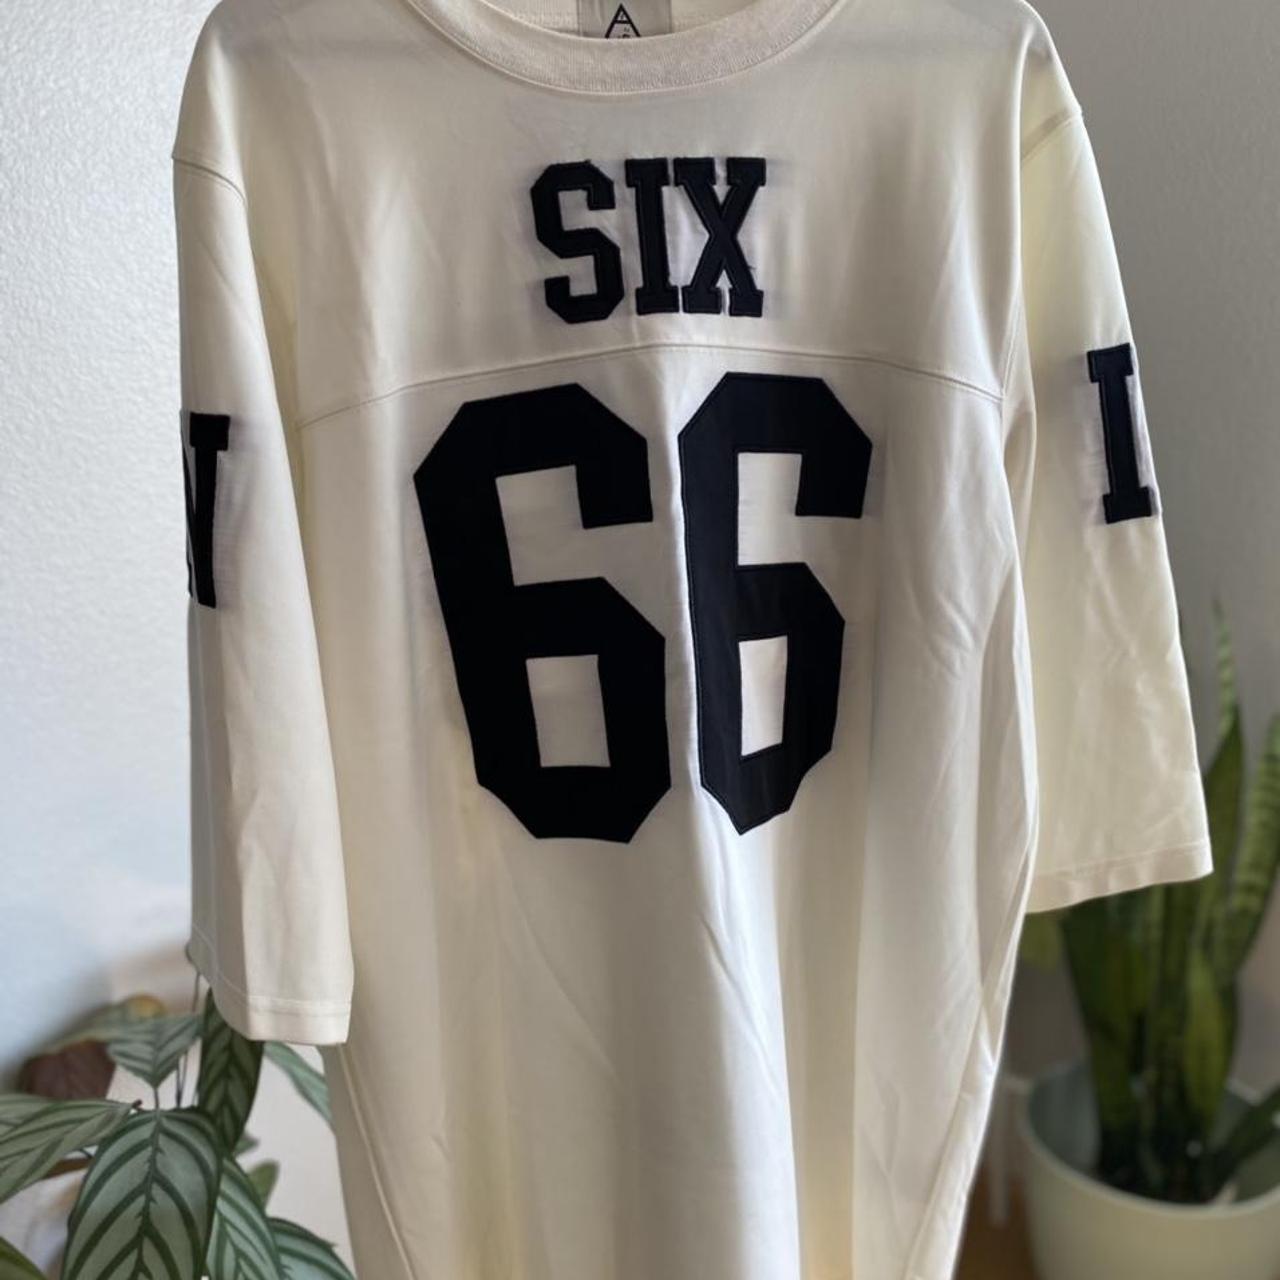 UNIF 666 Jersey Gently loved Size XL Original... - Depop